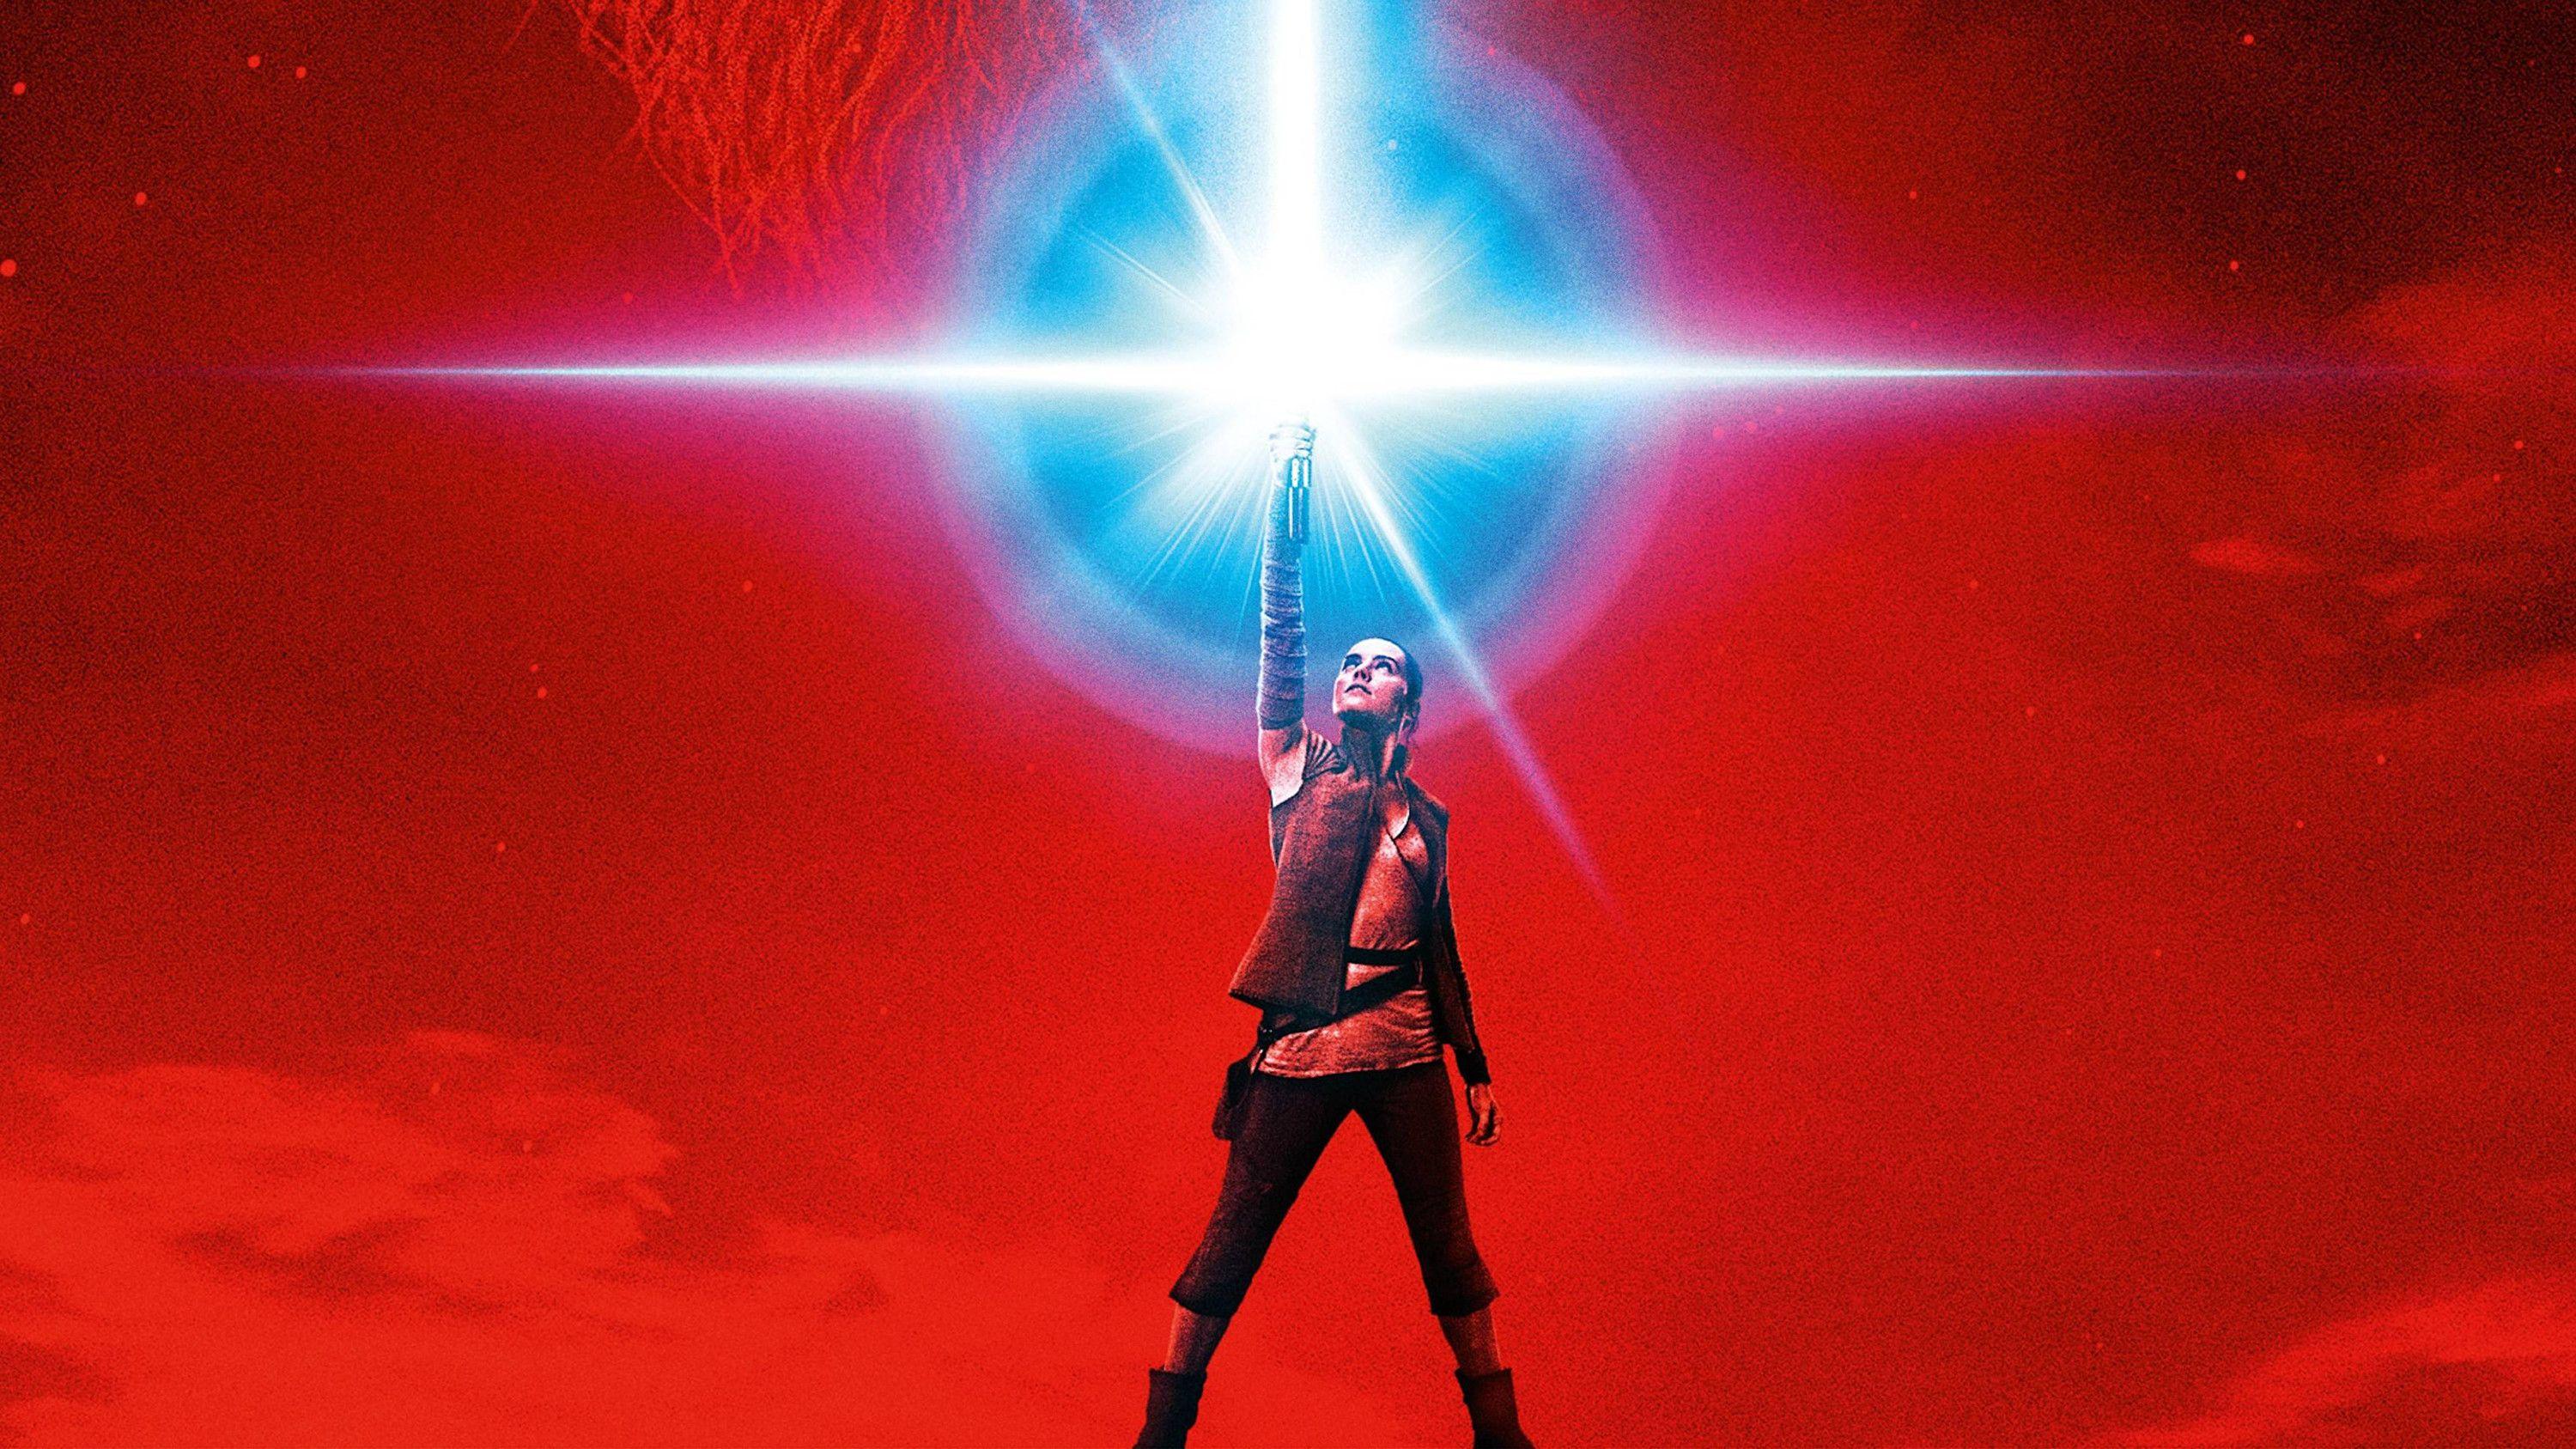 Star Wars Jedi Wallpaper background picture